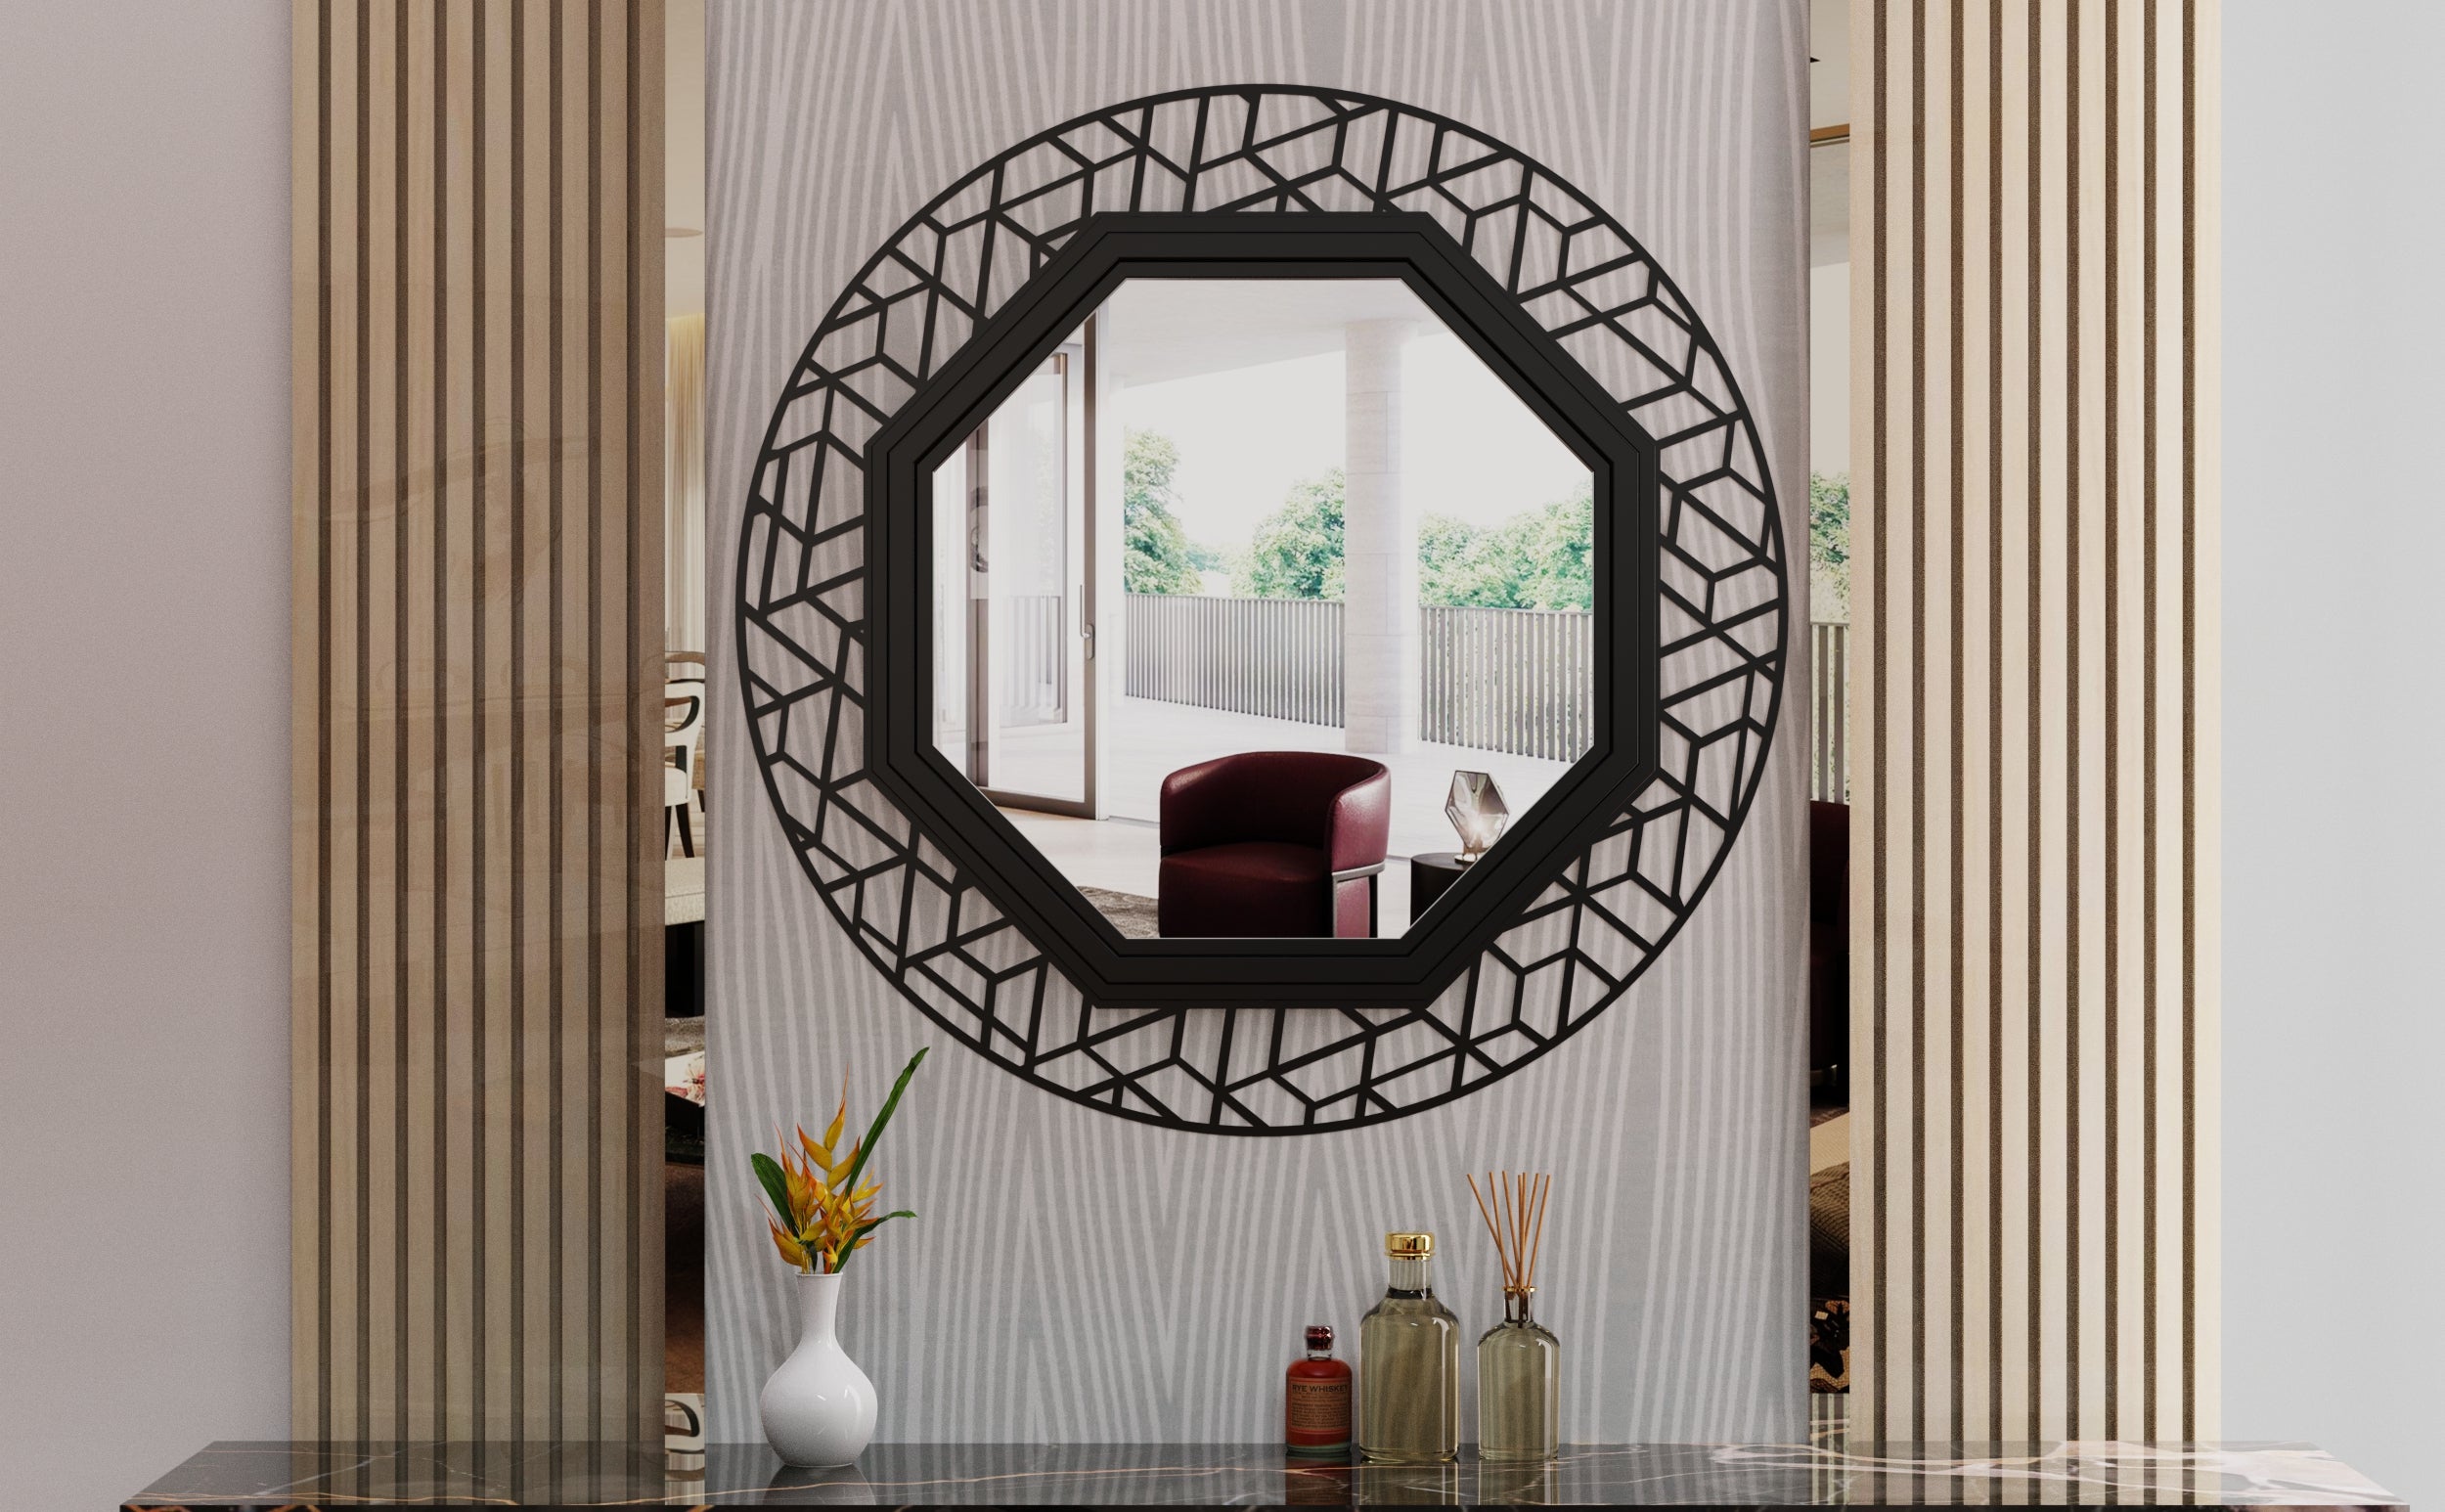 Black Decorative Mirror for Wall Decor, Octagonal Wall Mirror Decor with Metal Frame, 24"x24" Modern Bathroom Mirror for Bedroom Bathroom